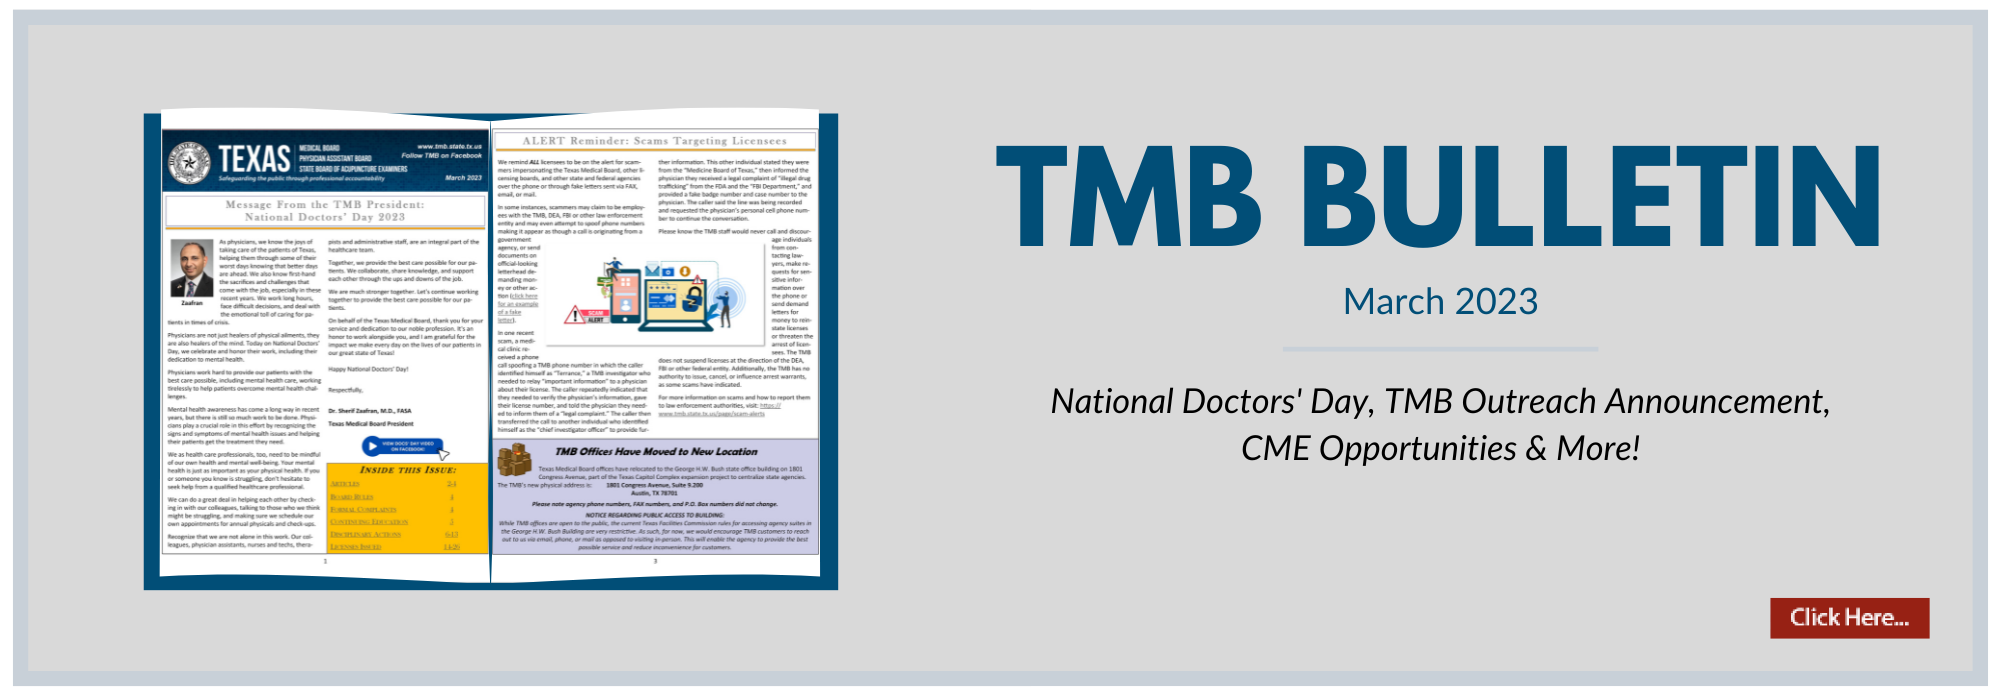 Latest TMB Bulletin Banner